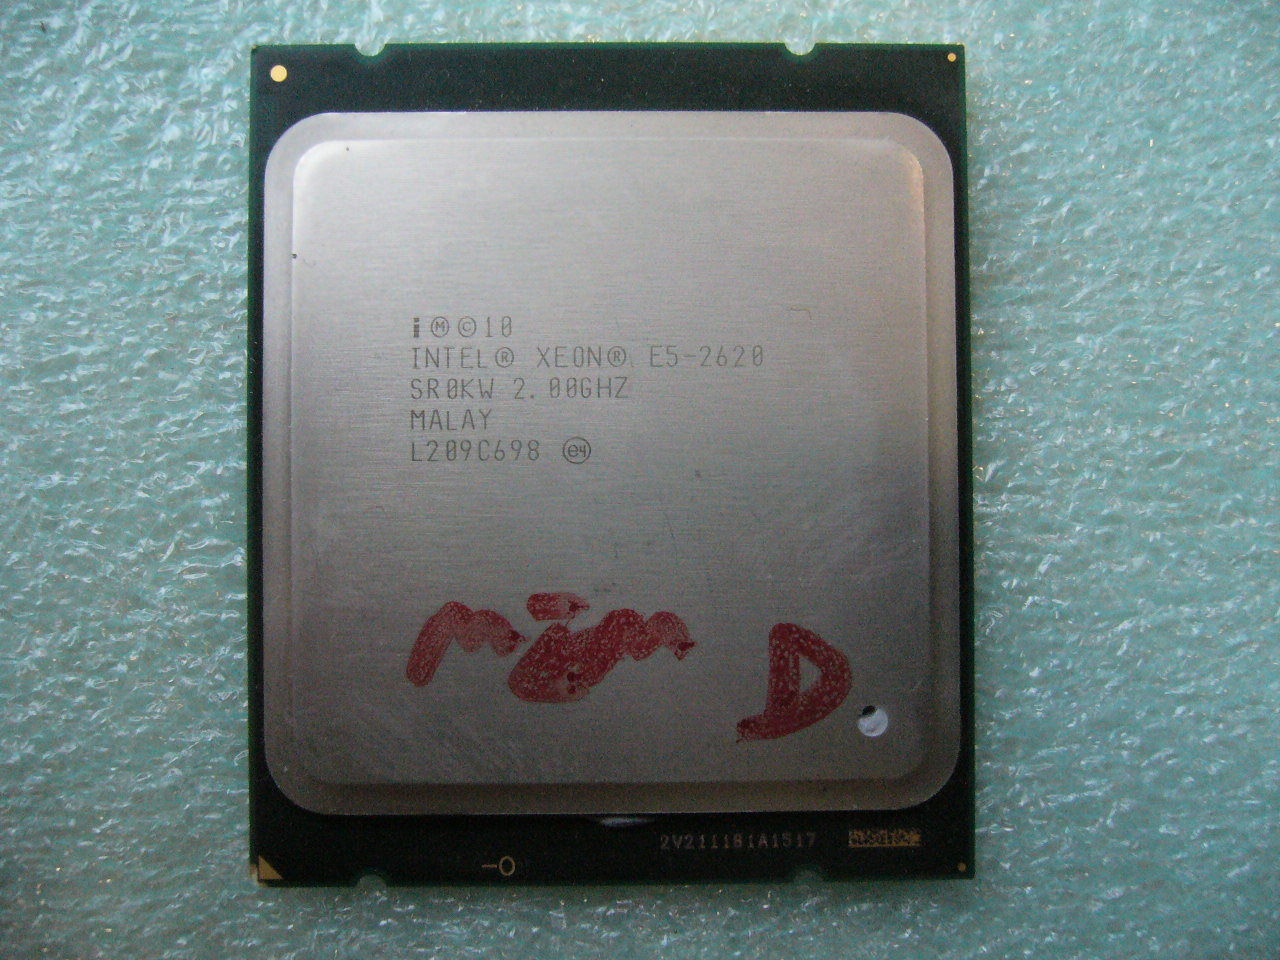 QTY 1x Intel CPU E5-2620 CPU 6-Cores 2.0Ghz LGA2011 SR0KW Mem Channel damaged